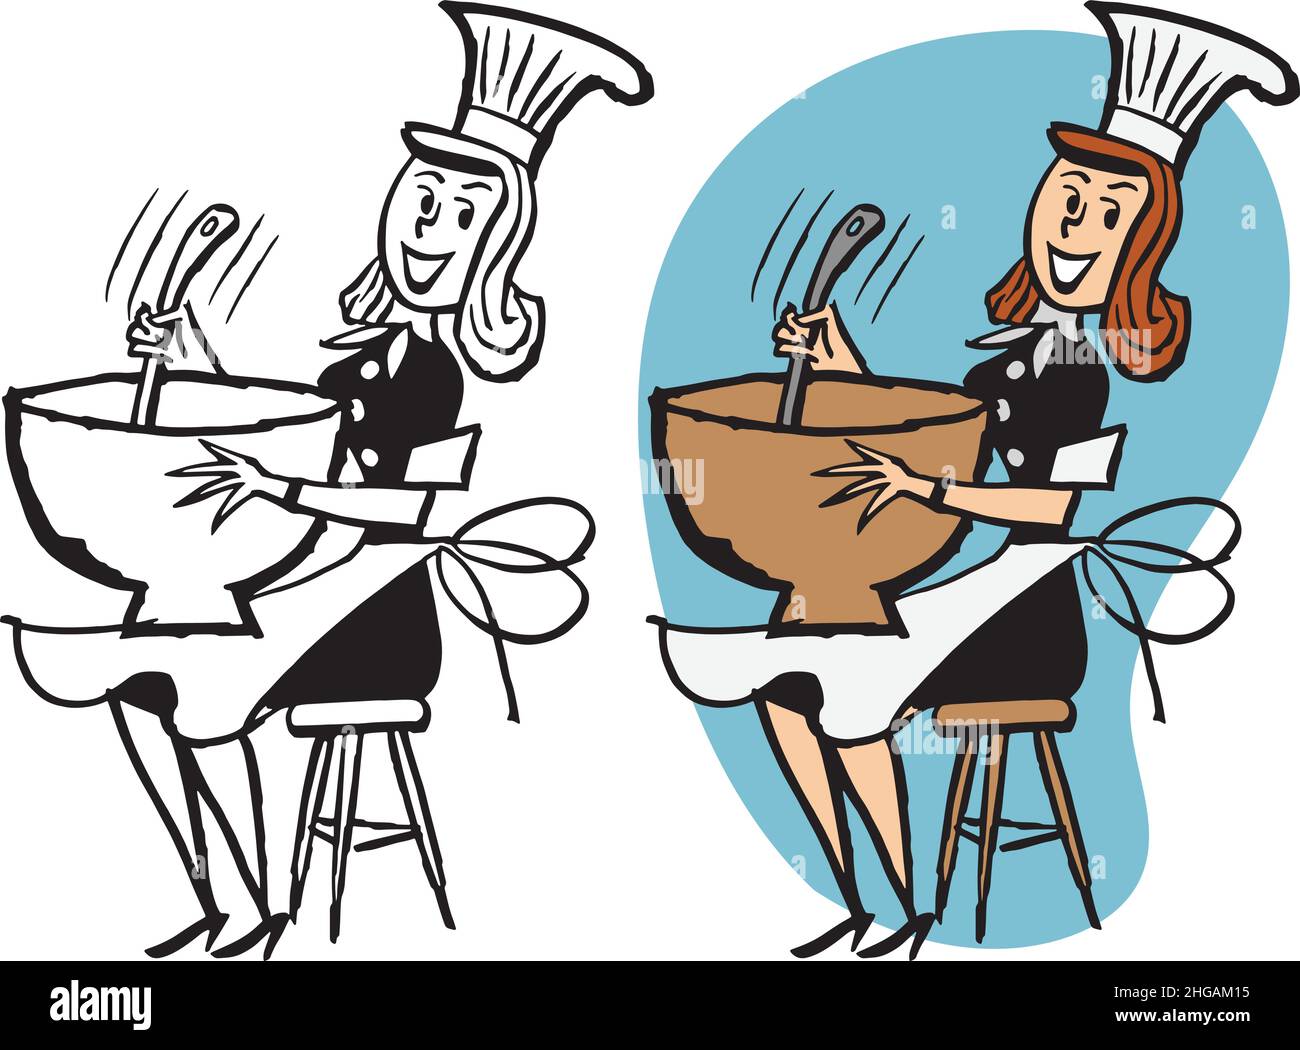 https://c8.alamy.com/comp/2HGAM15/a-vintage-retro-cartoon-of-a-female-chef-mixing-food-in-a-large-bowl-2HGAM15.jpg